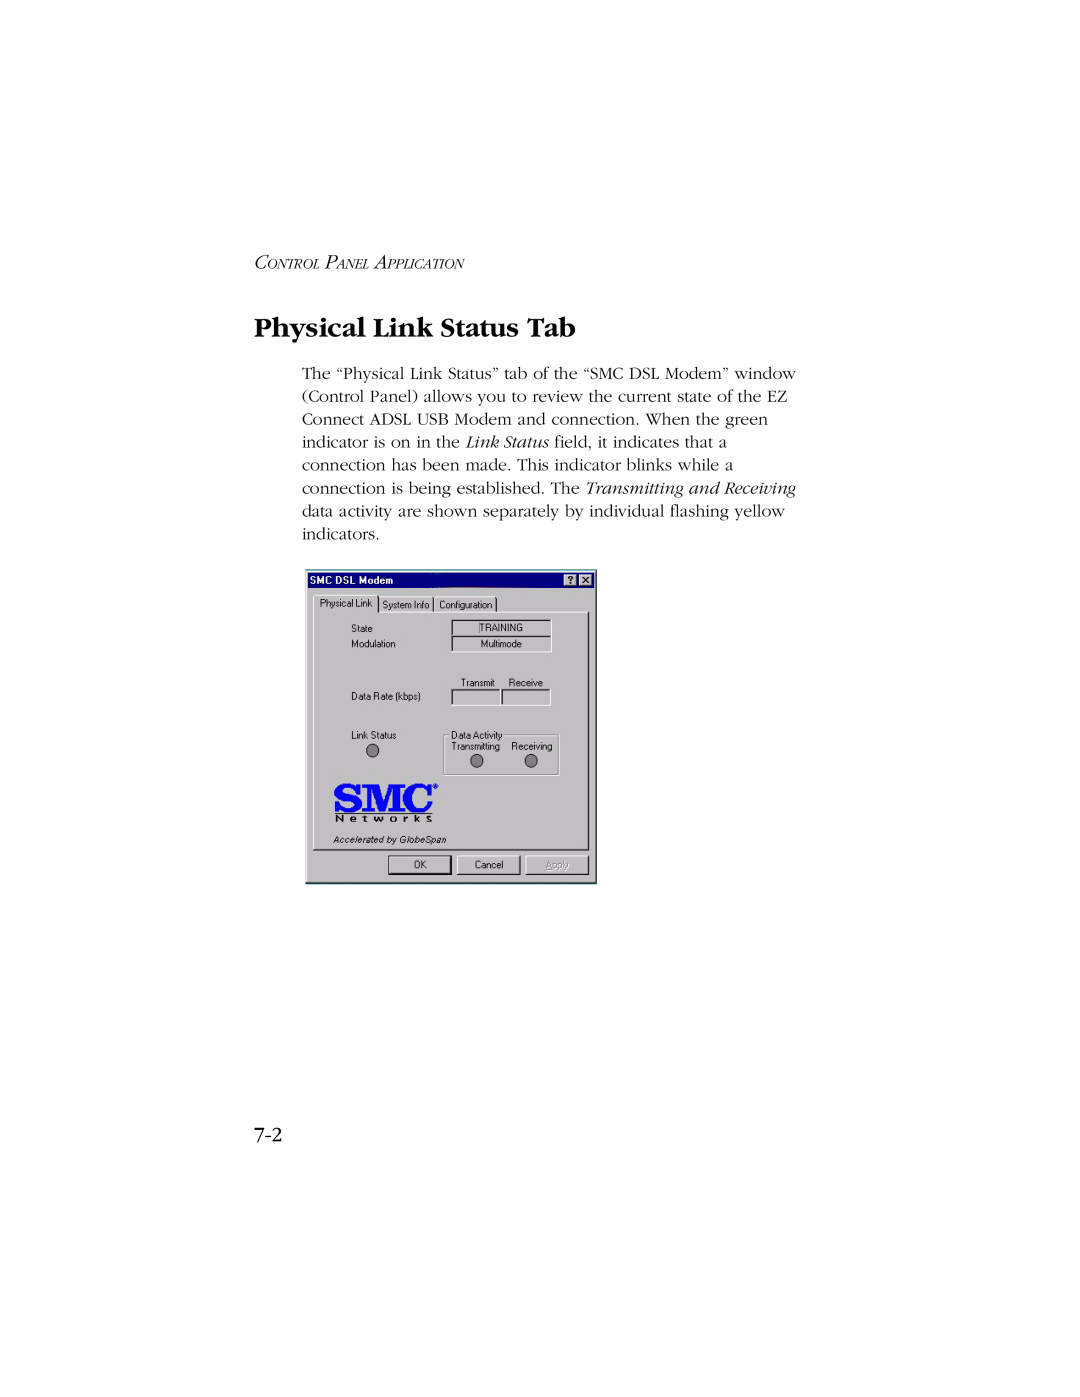 SMC Networks SMC7003-USB manual Physical Link Status Tab, Control Panel Application 